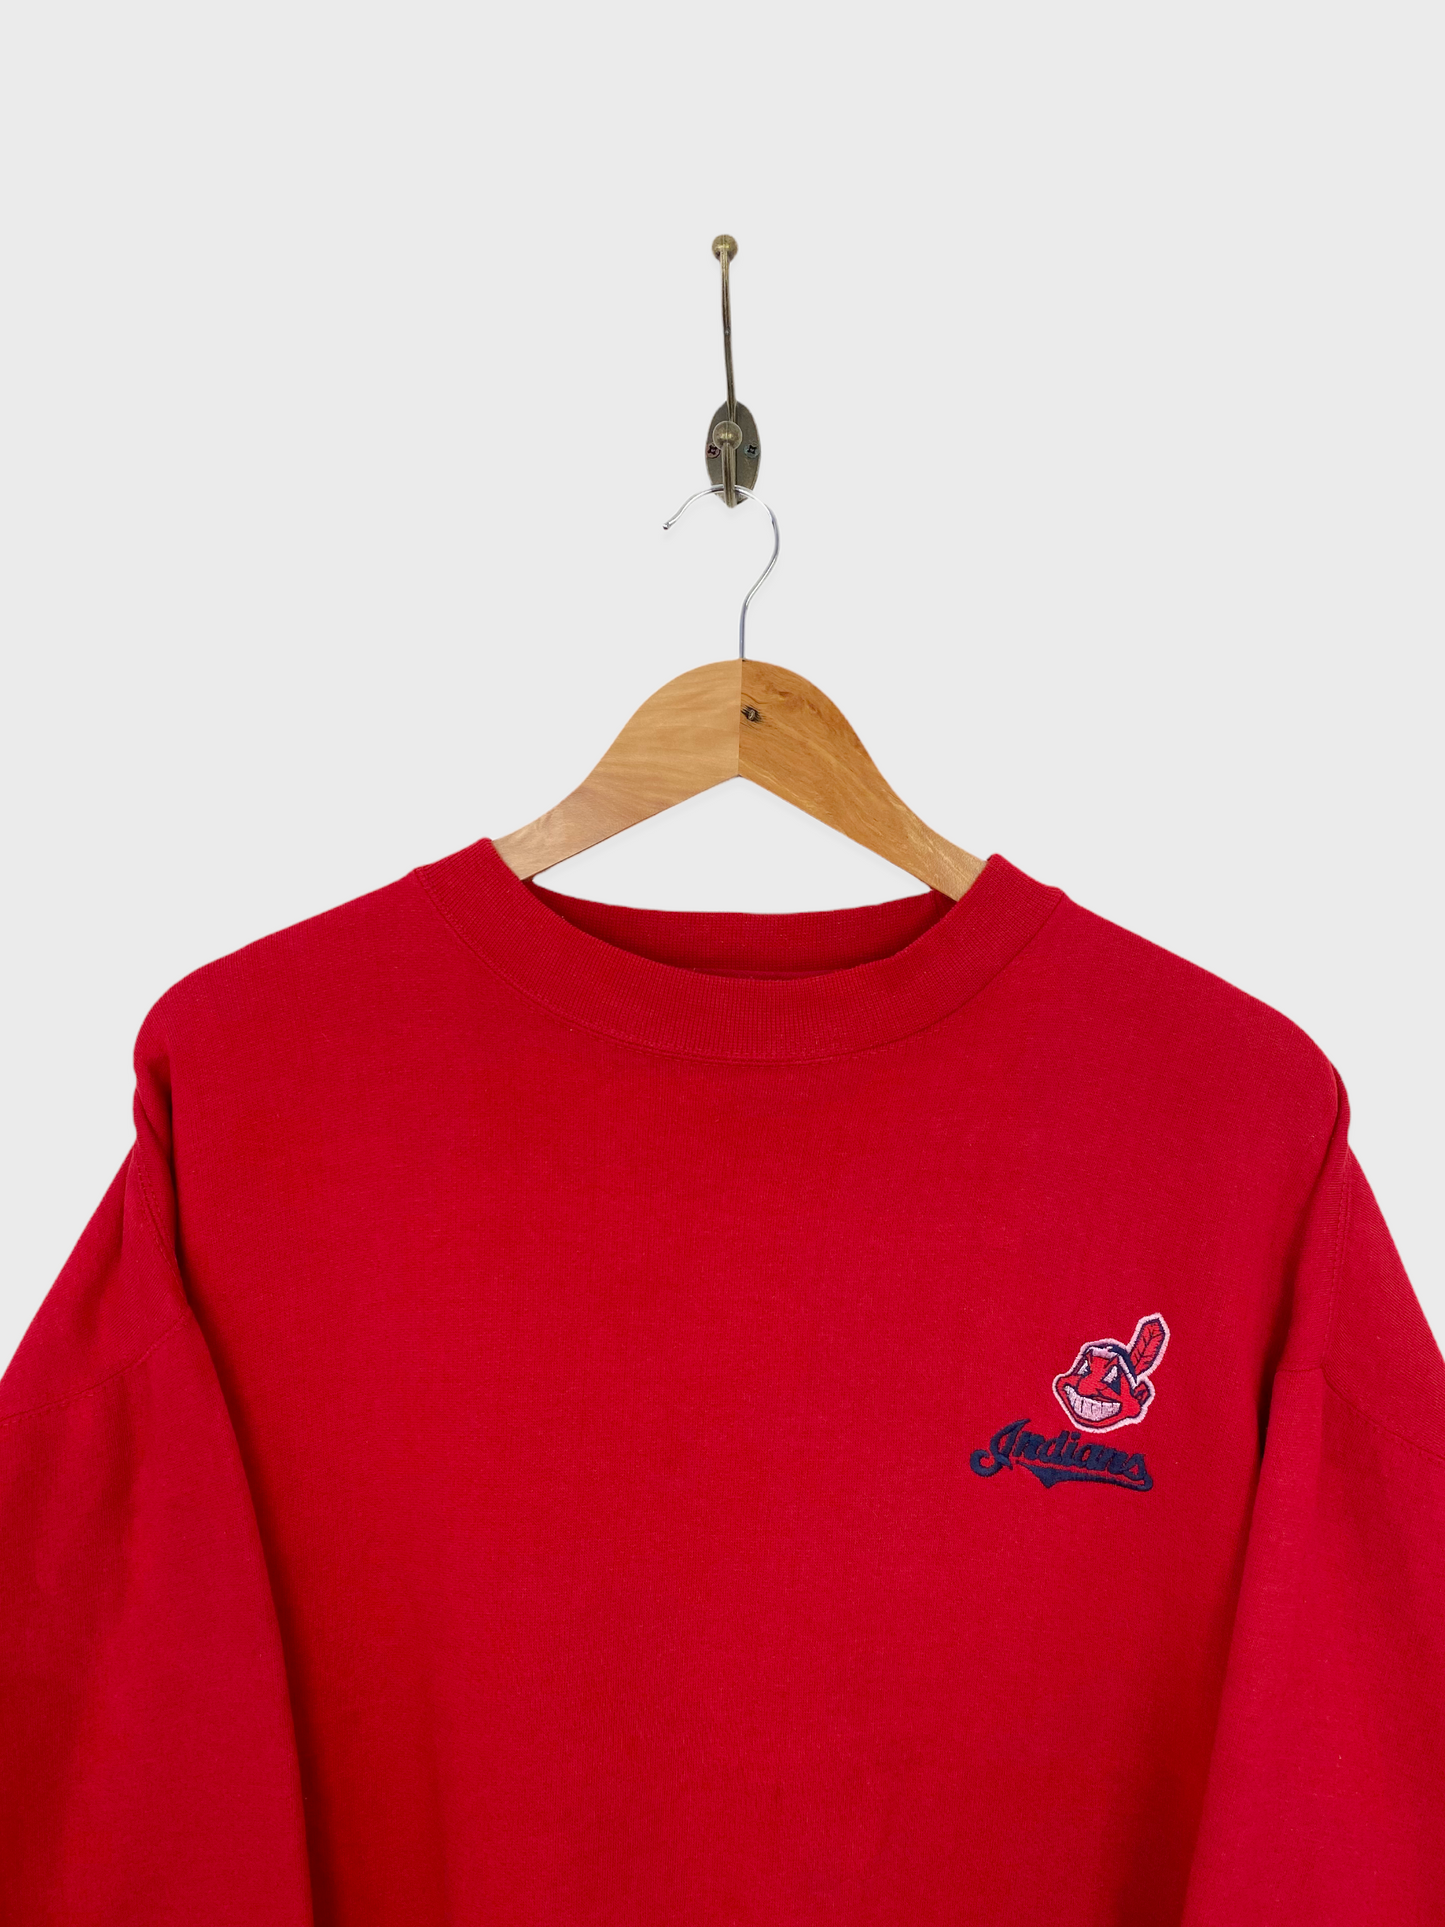 90's Cleveland Indians MLB Embroidered Vintage Sweatshirt Size L